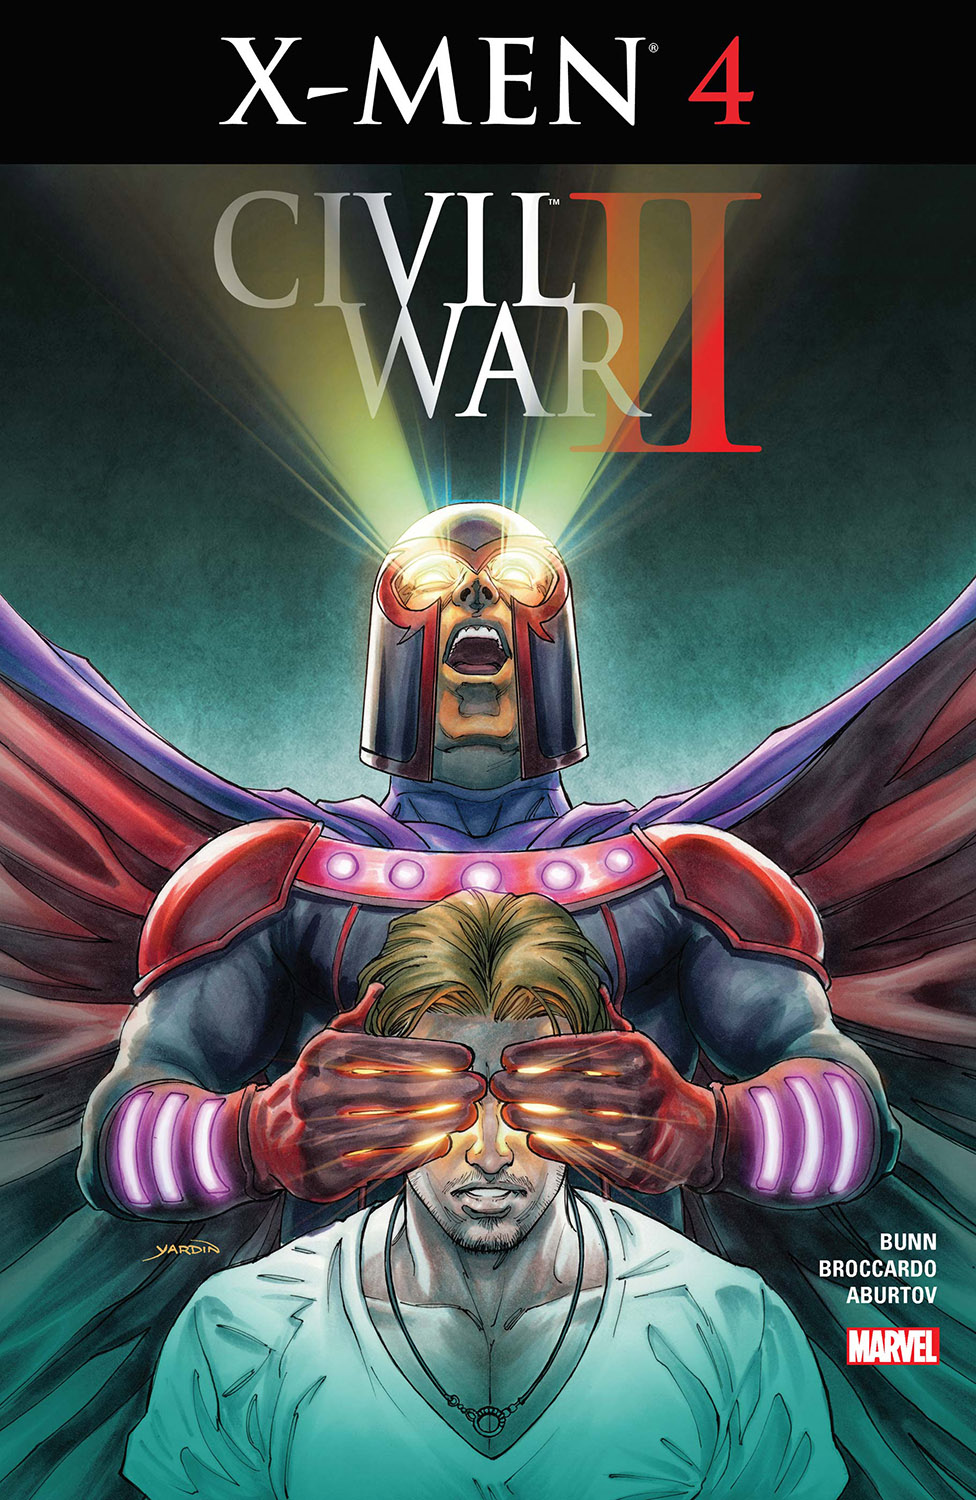 Civil War II: X-Men (2016) #4